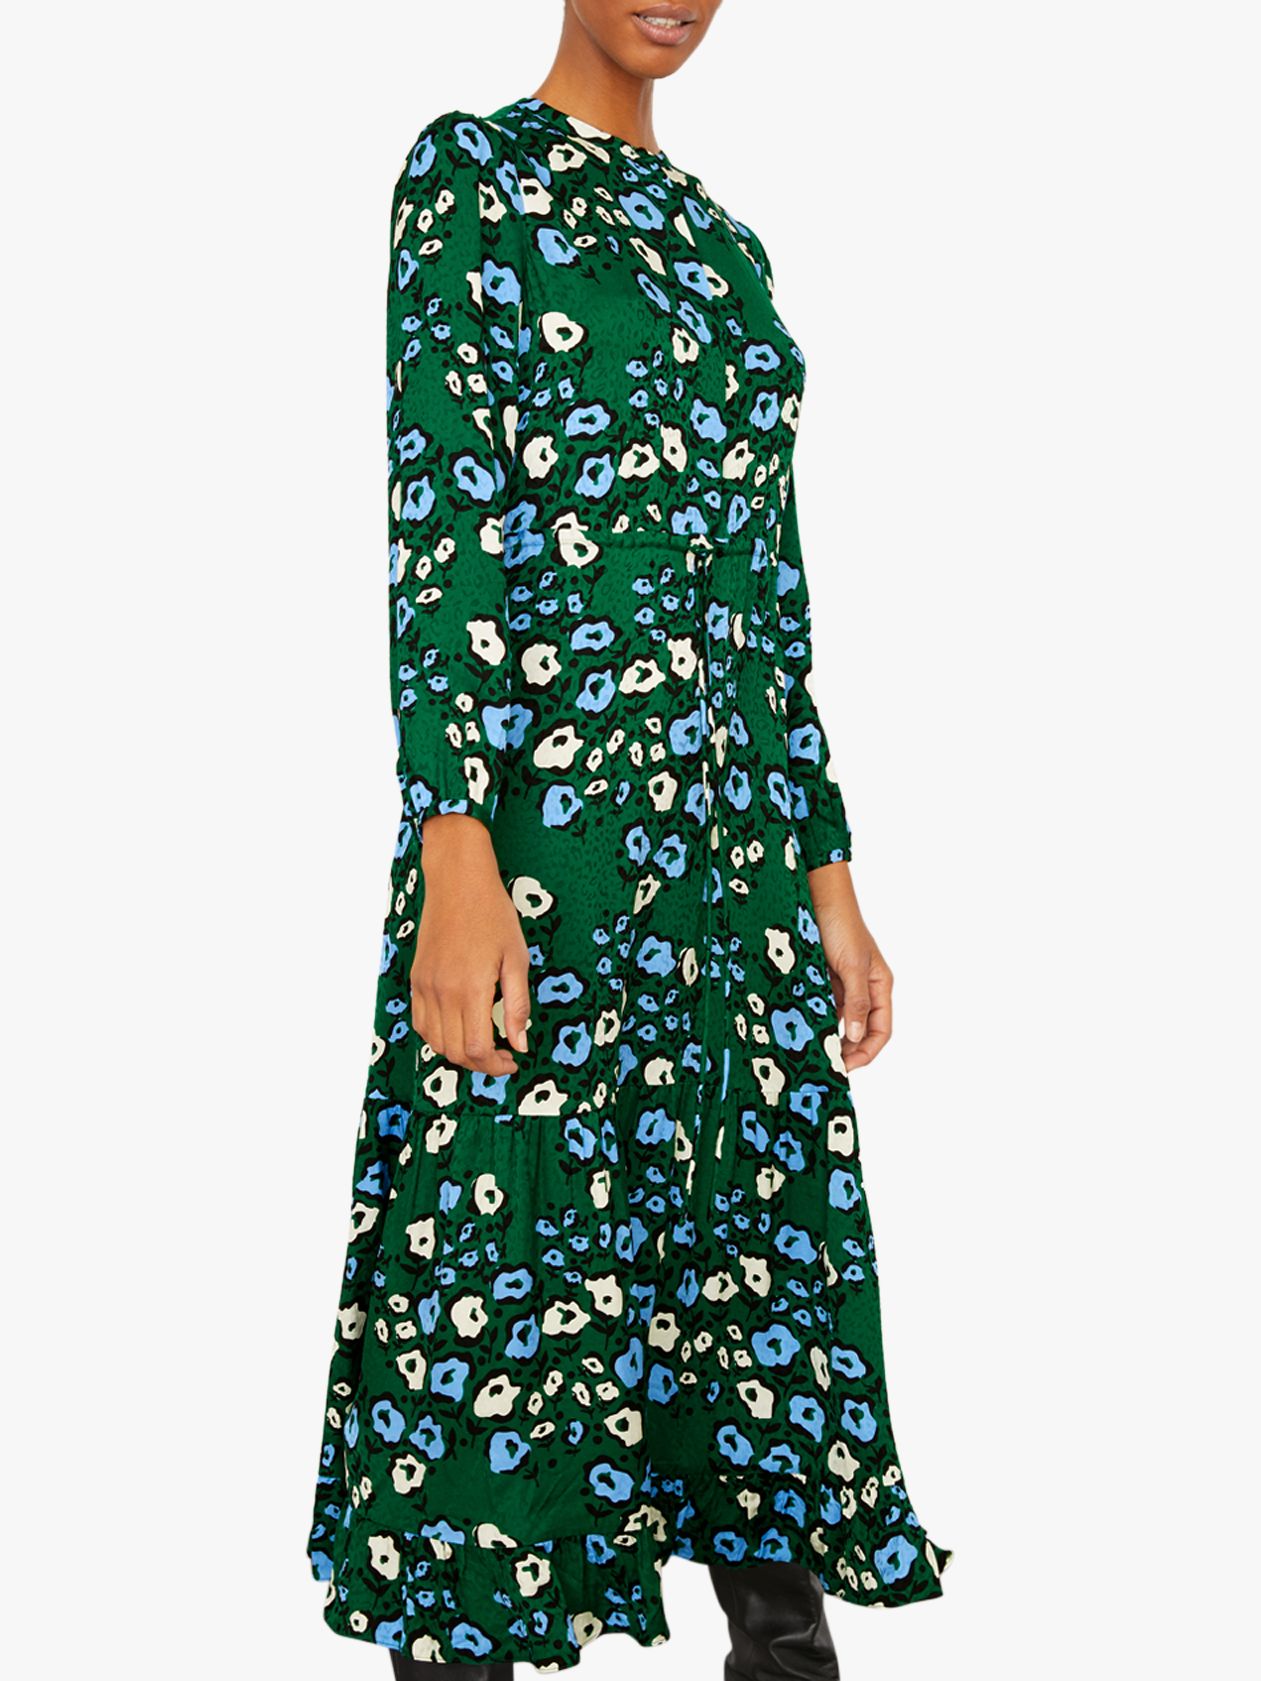 Jigsaw Graphic Poppy Print Dress, Evergreen at John Lewis & Partners